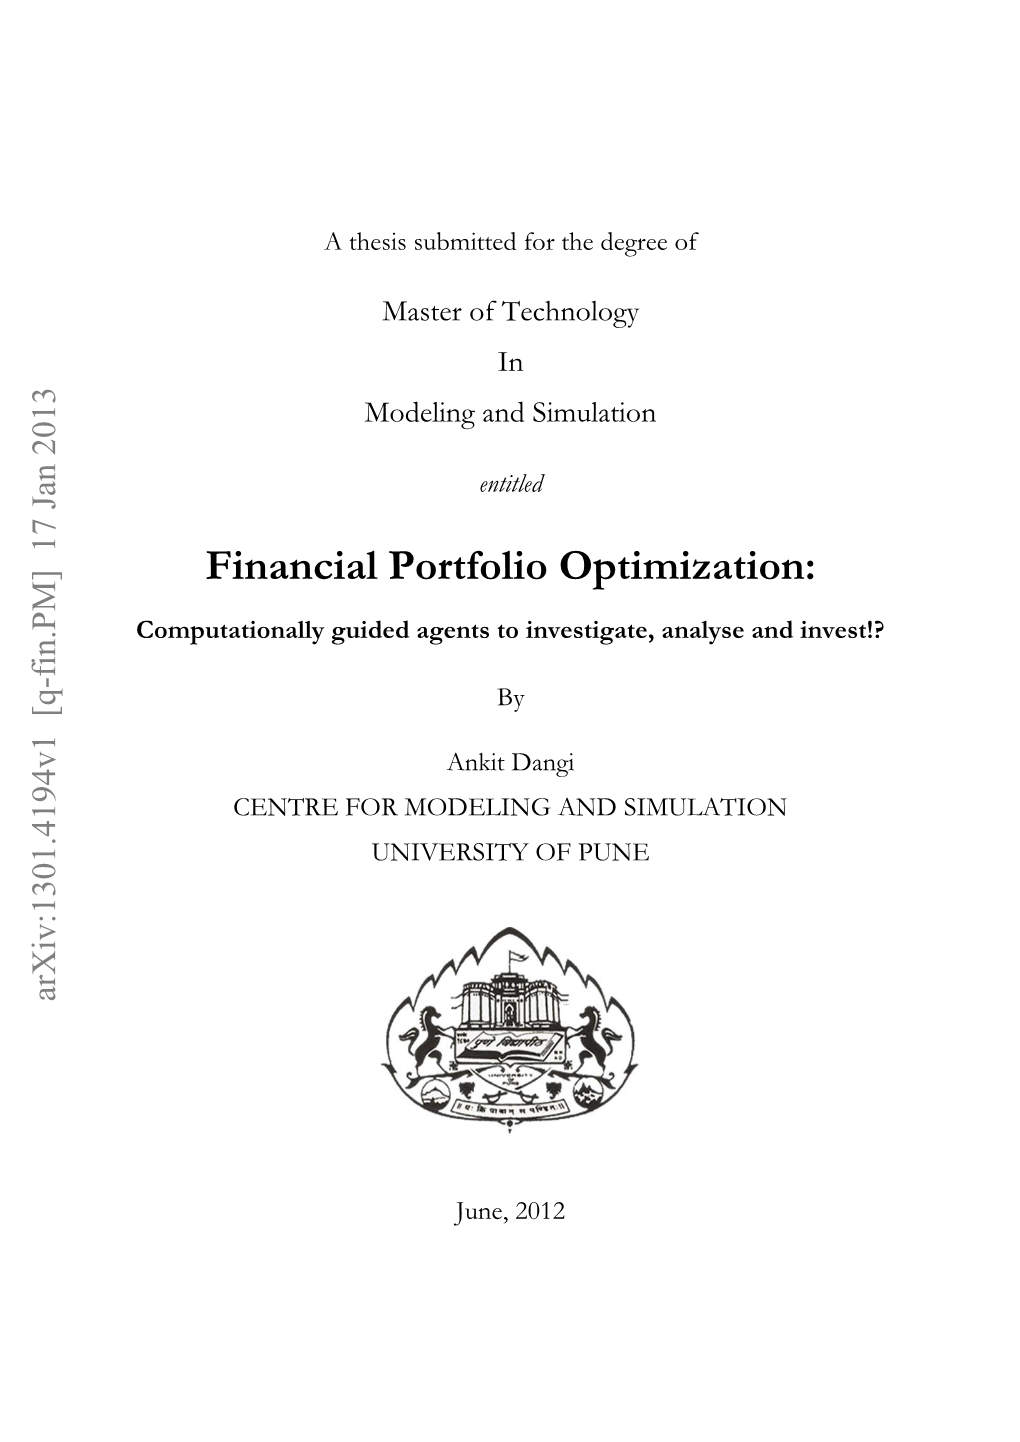 Financial Portfolio Optimization